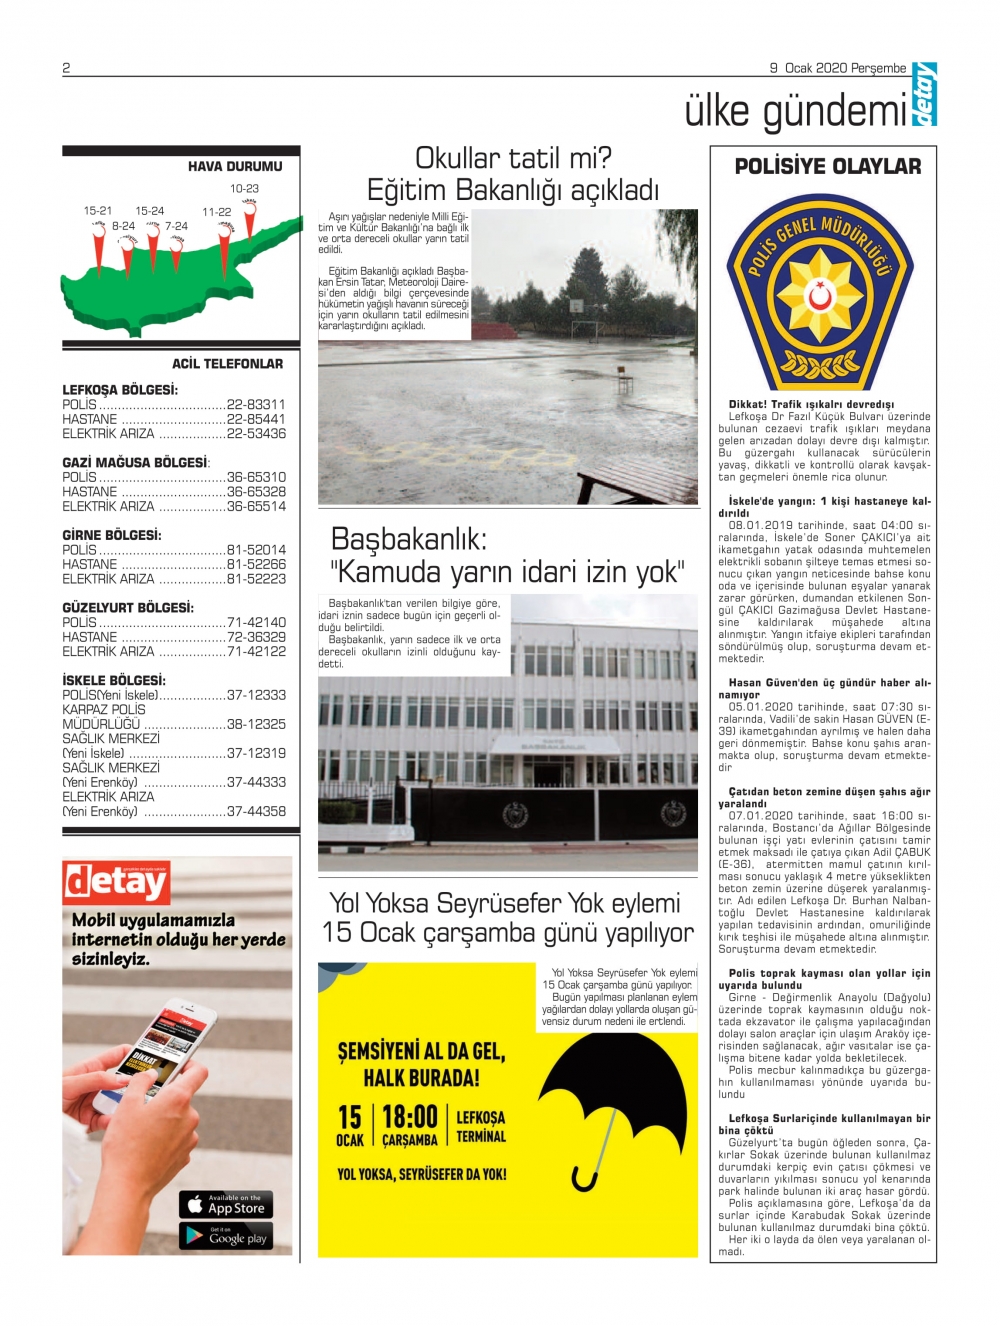 Detay Gazetes 9 Ocak 2020 galerisi resim 2